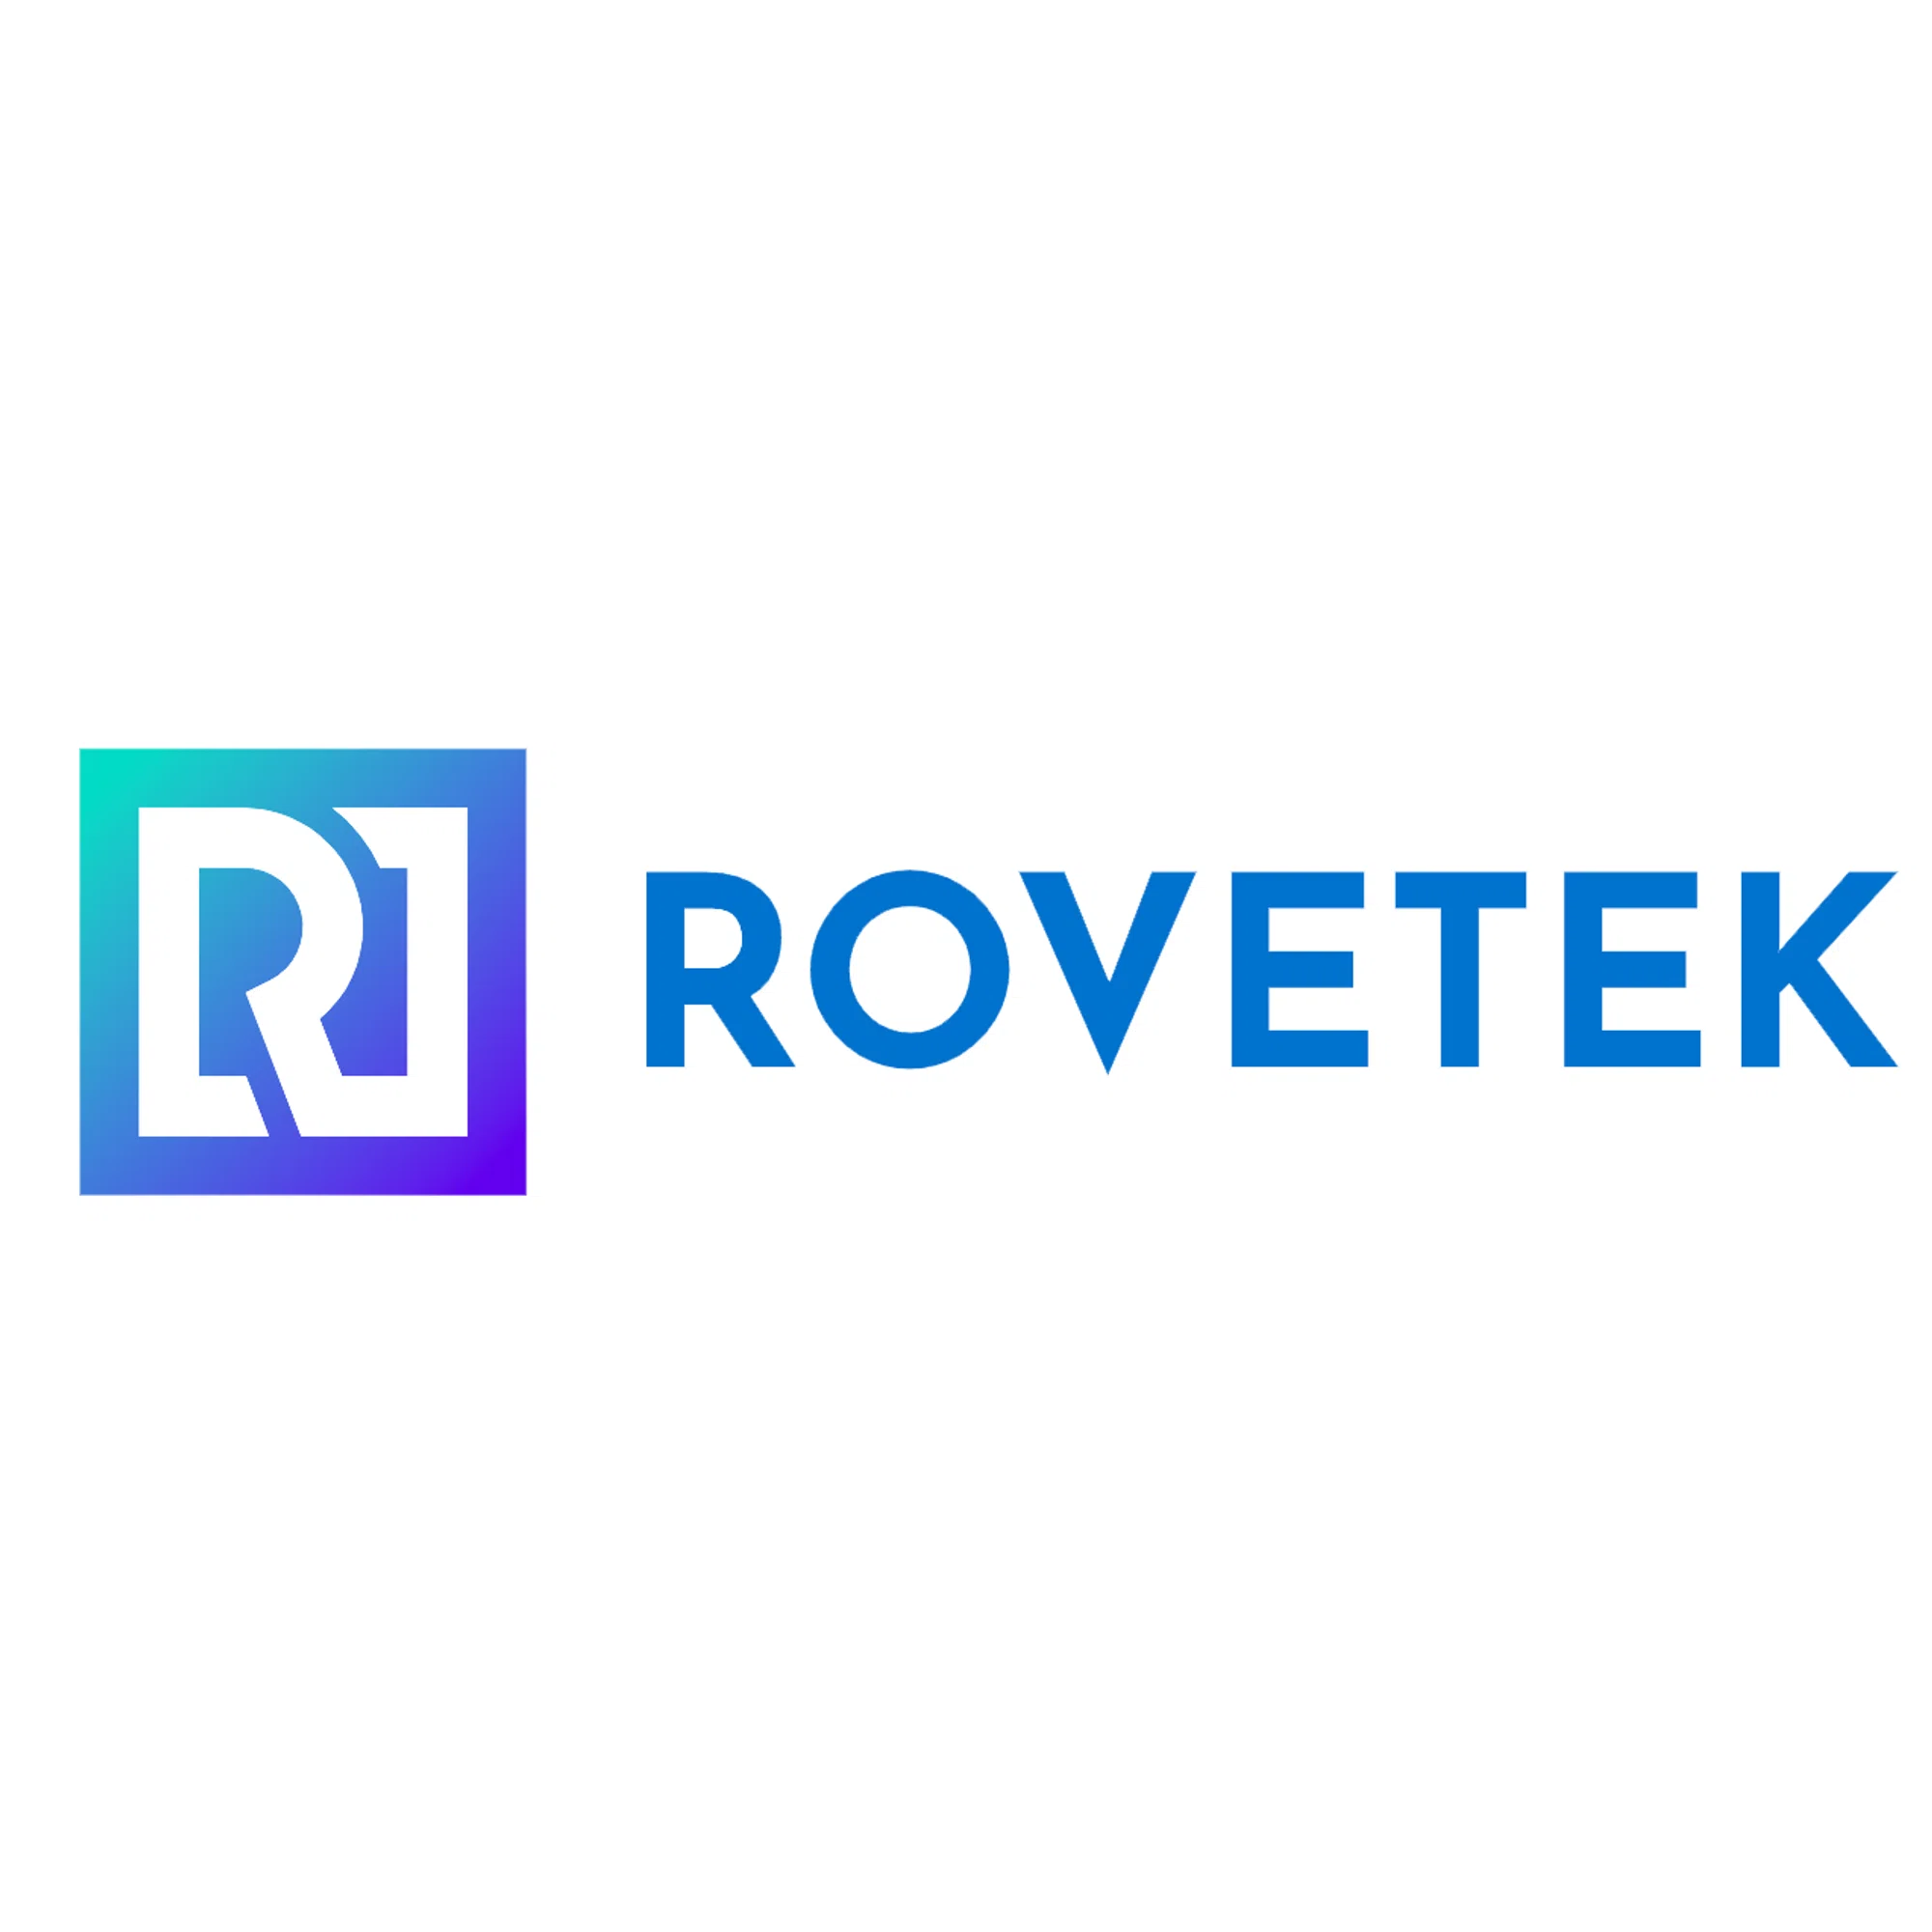 rovetek.com logo